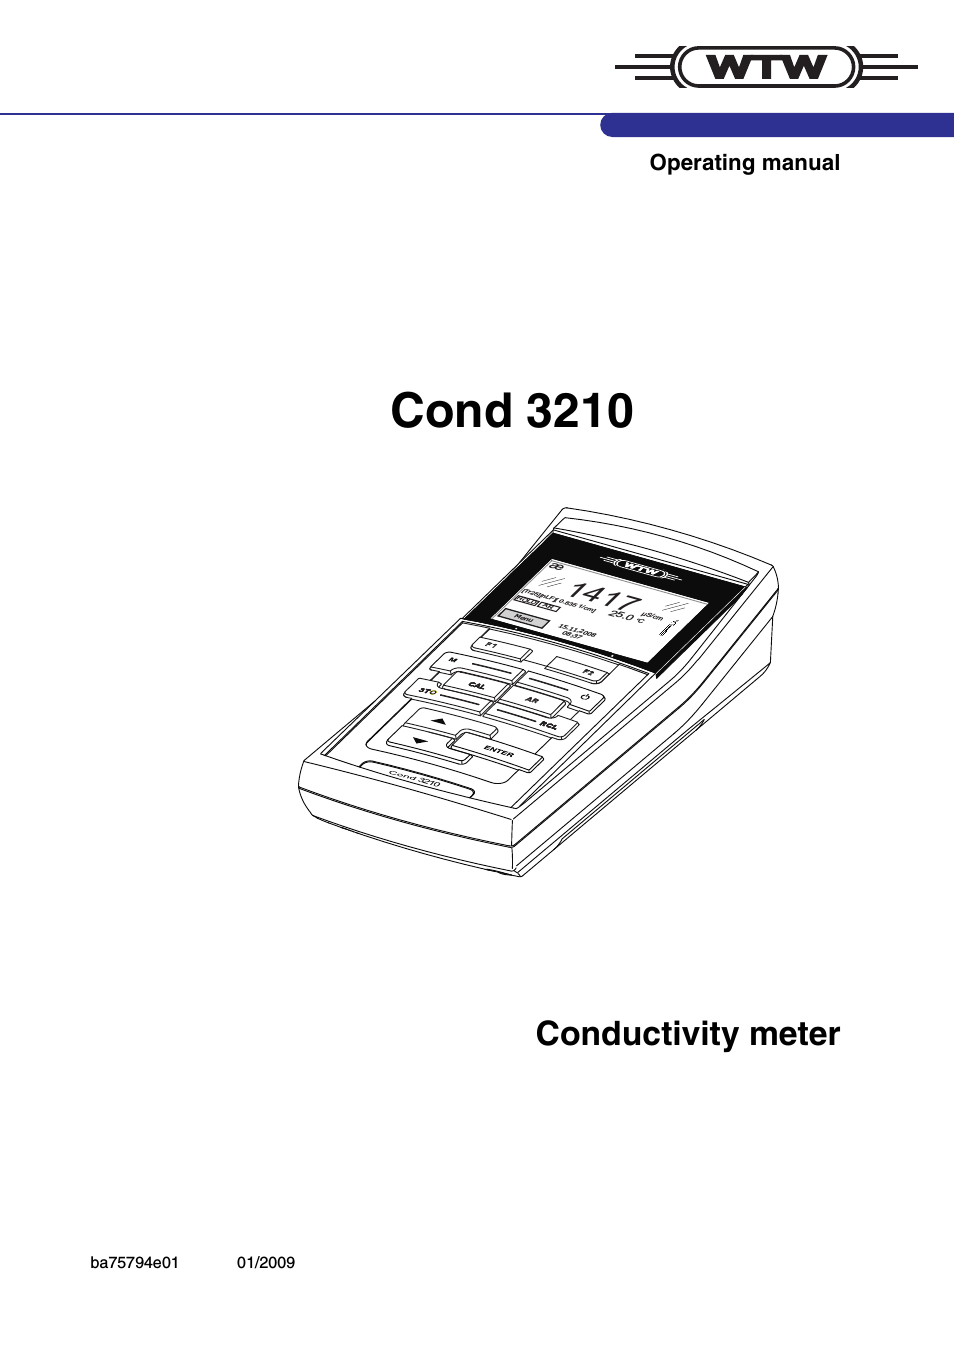 COND3210 HANDHELD CONDUCTIVITY METERS